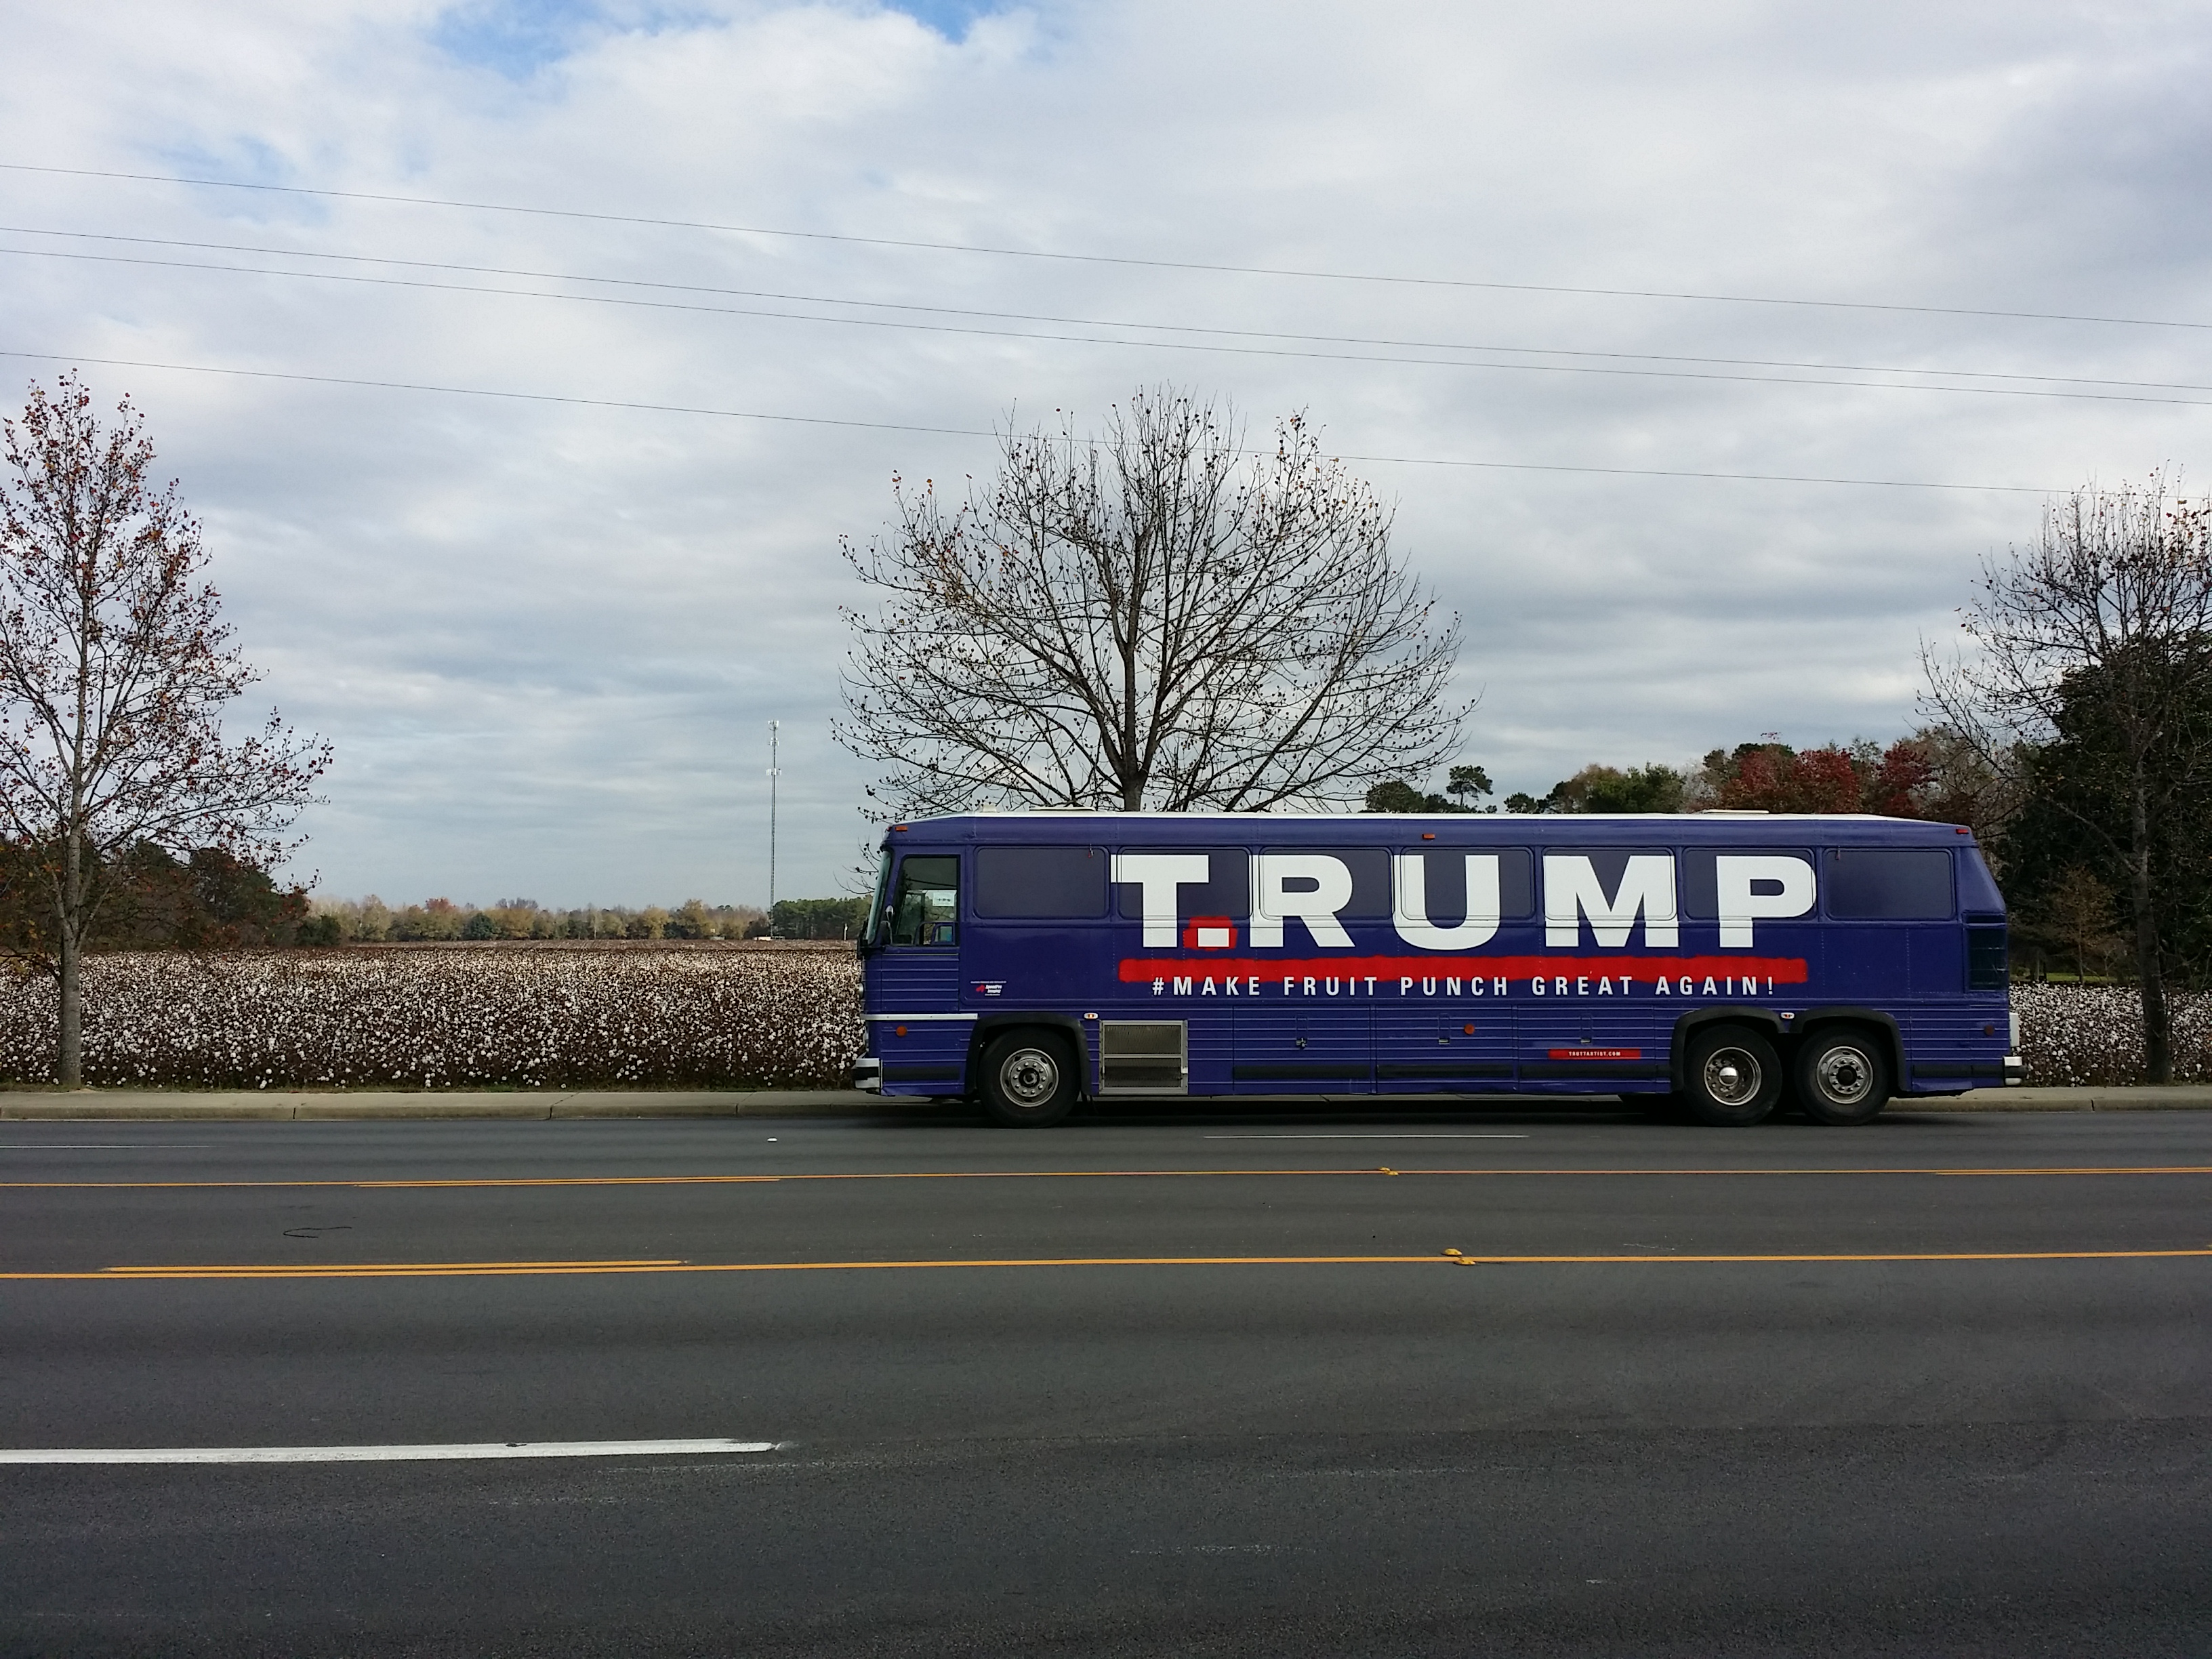 T.RUMP Bus heads home - South Carolina